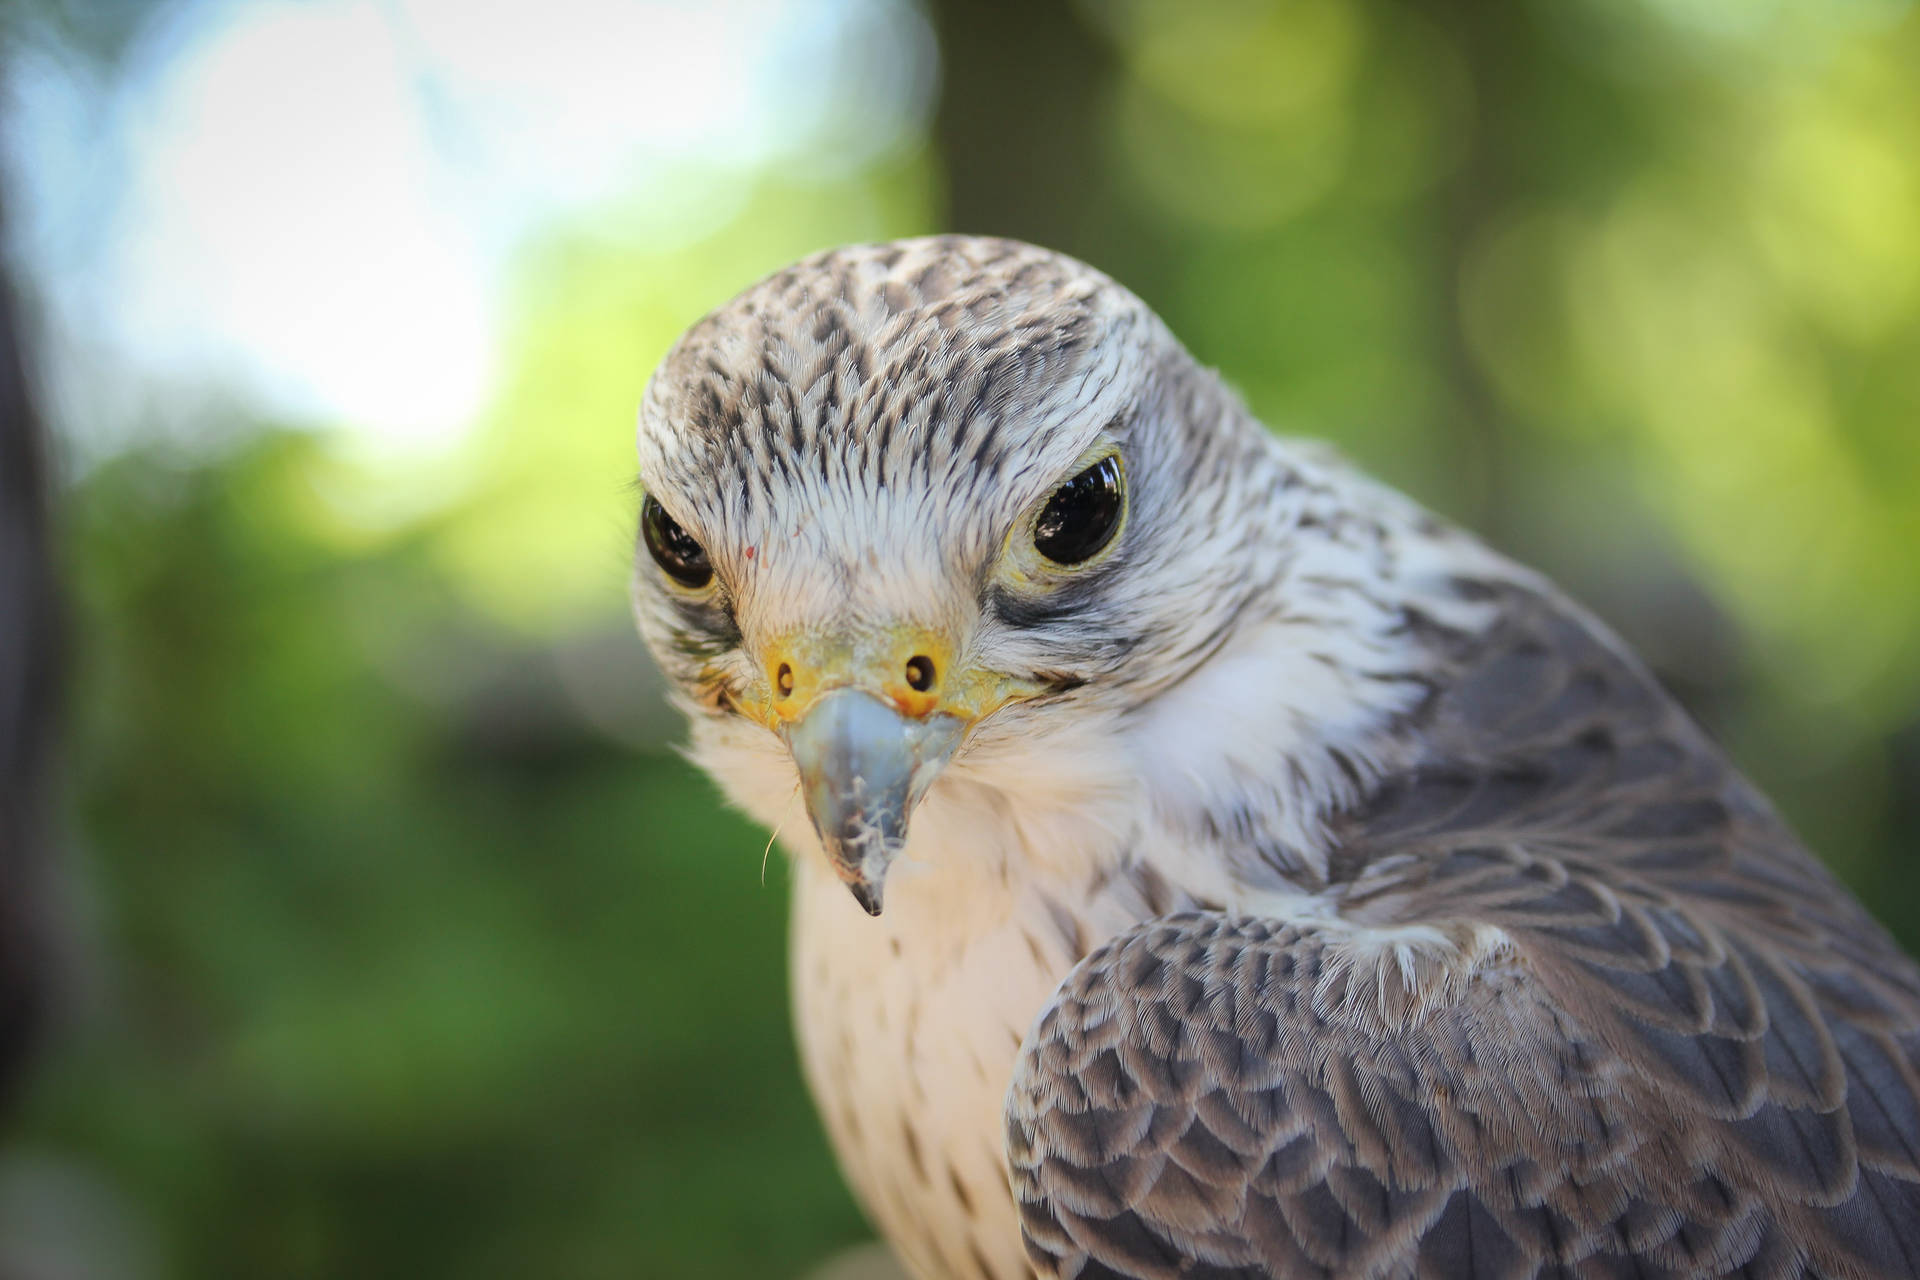 Falcon With Short Sharp Beak